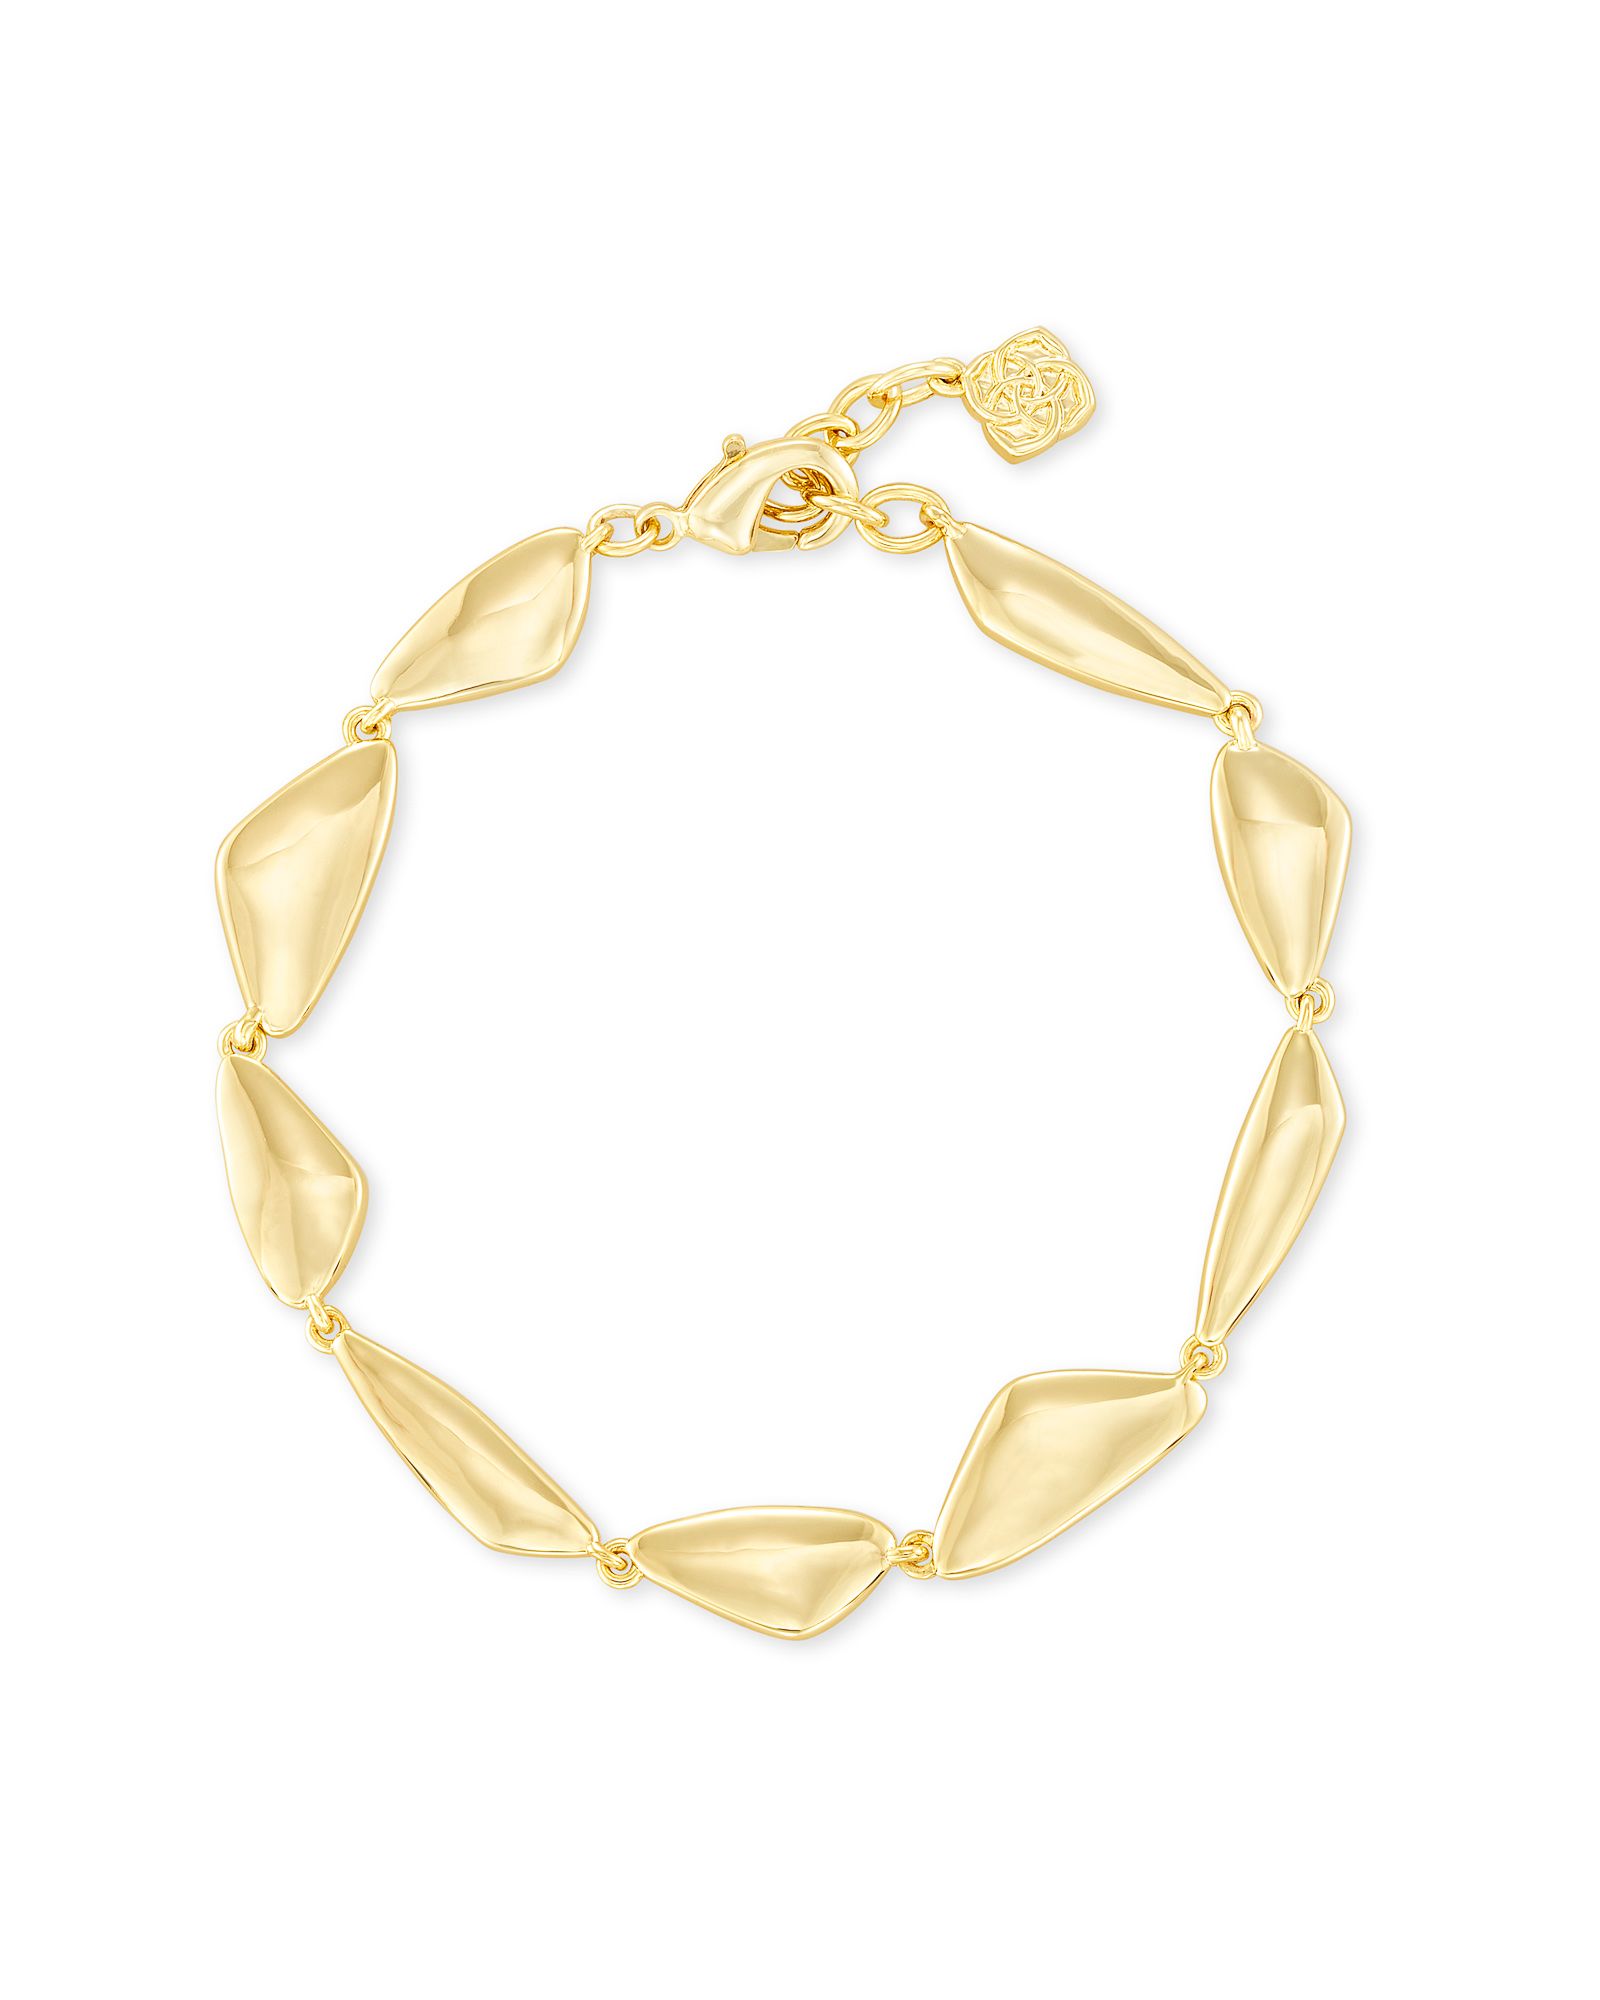 Kira Link Bracelet in Gold | Kendra Scott